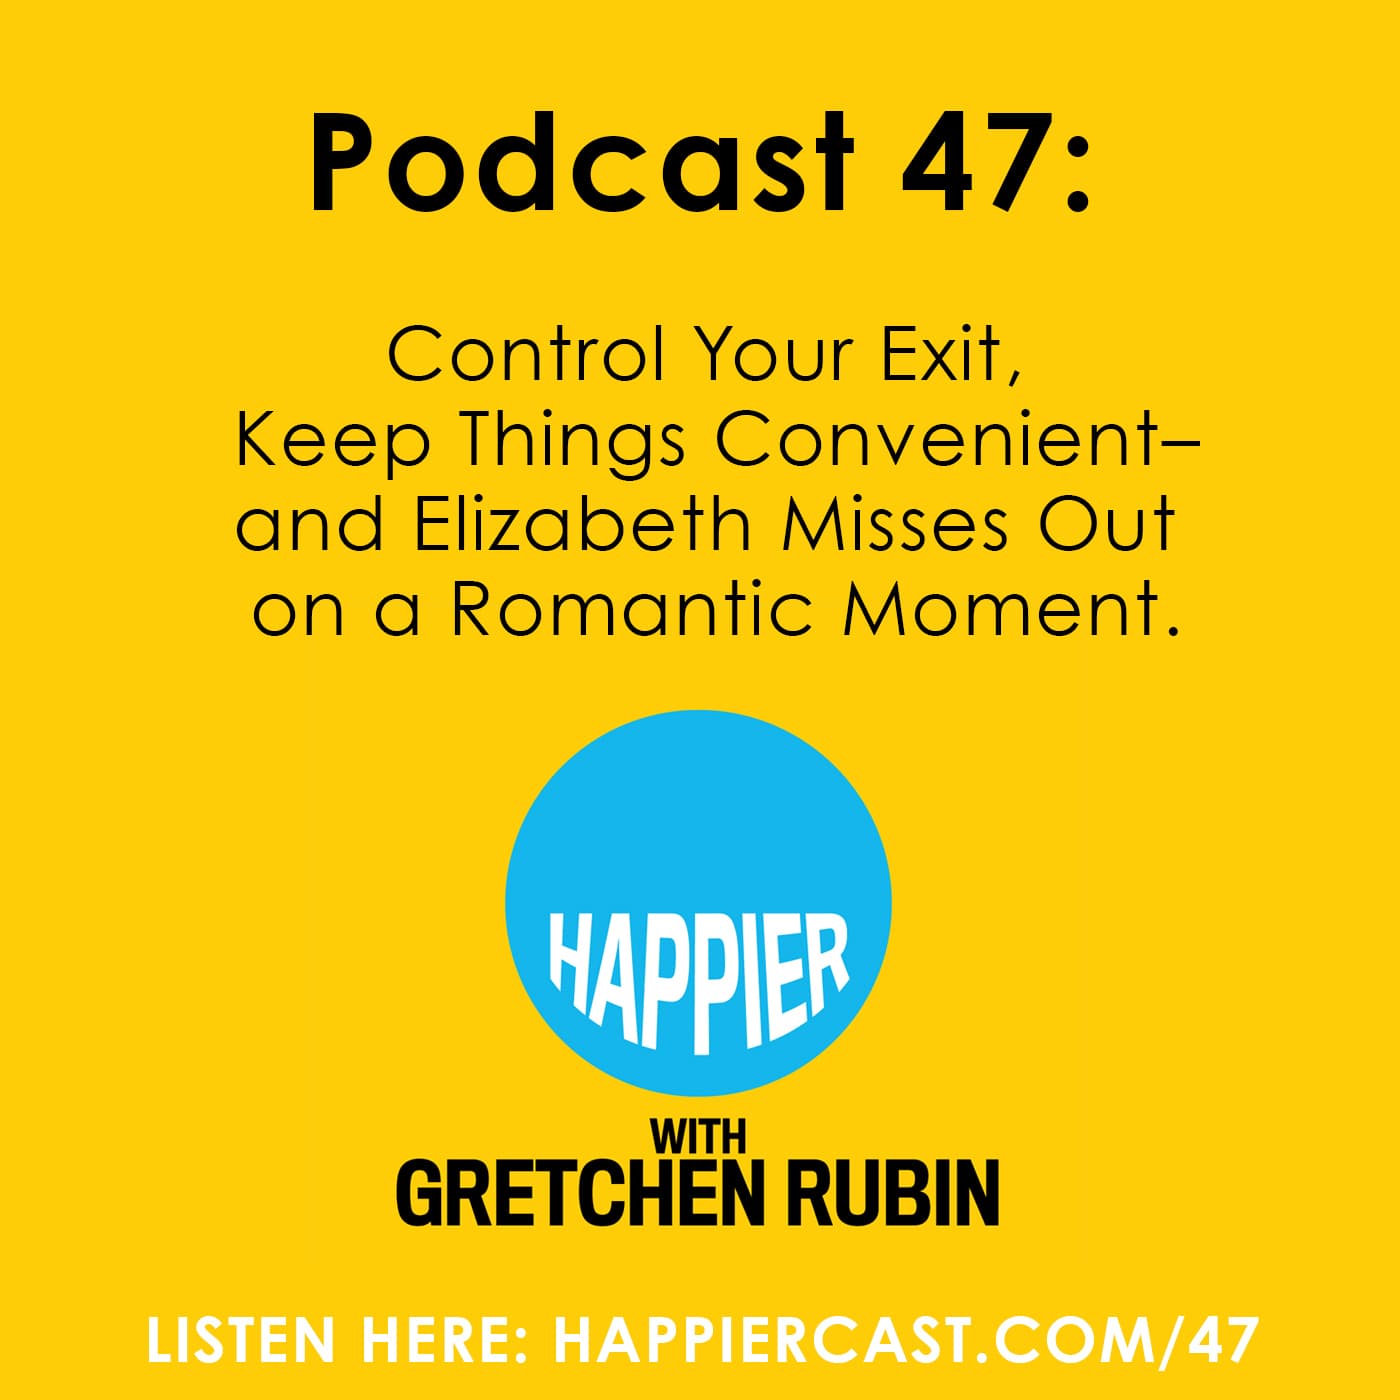 Happier with Gretchen Rubin #47 - Listen at GretchenRubin.com